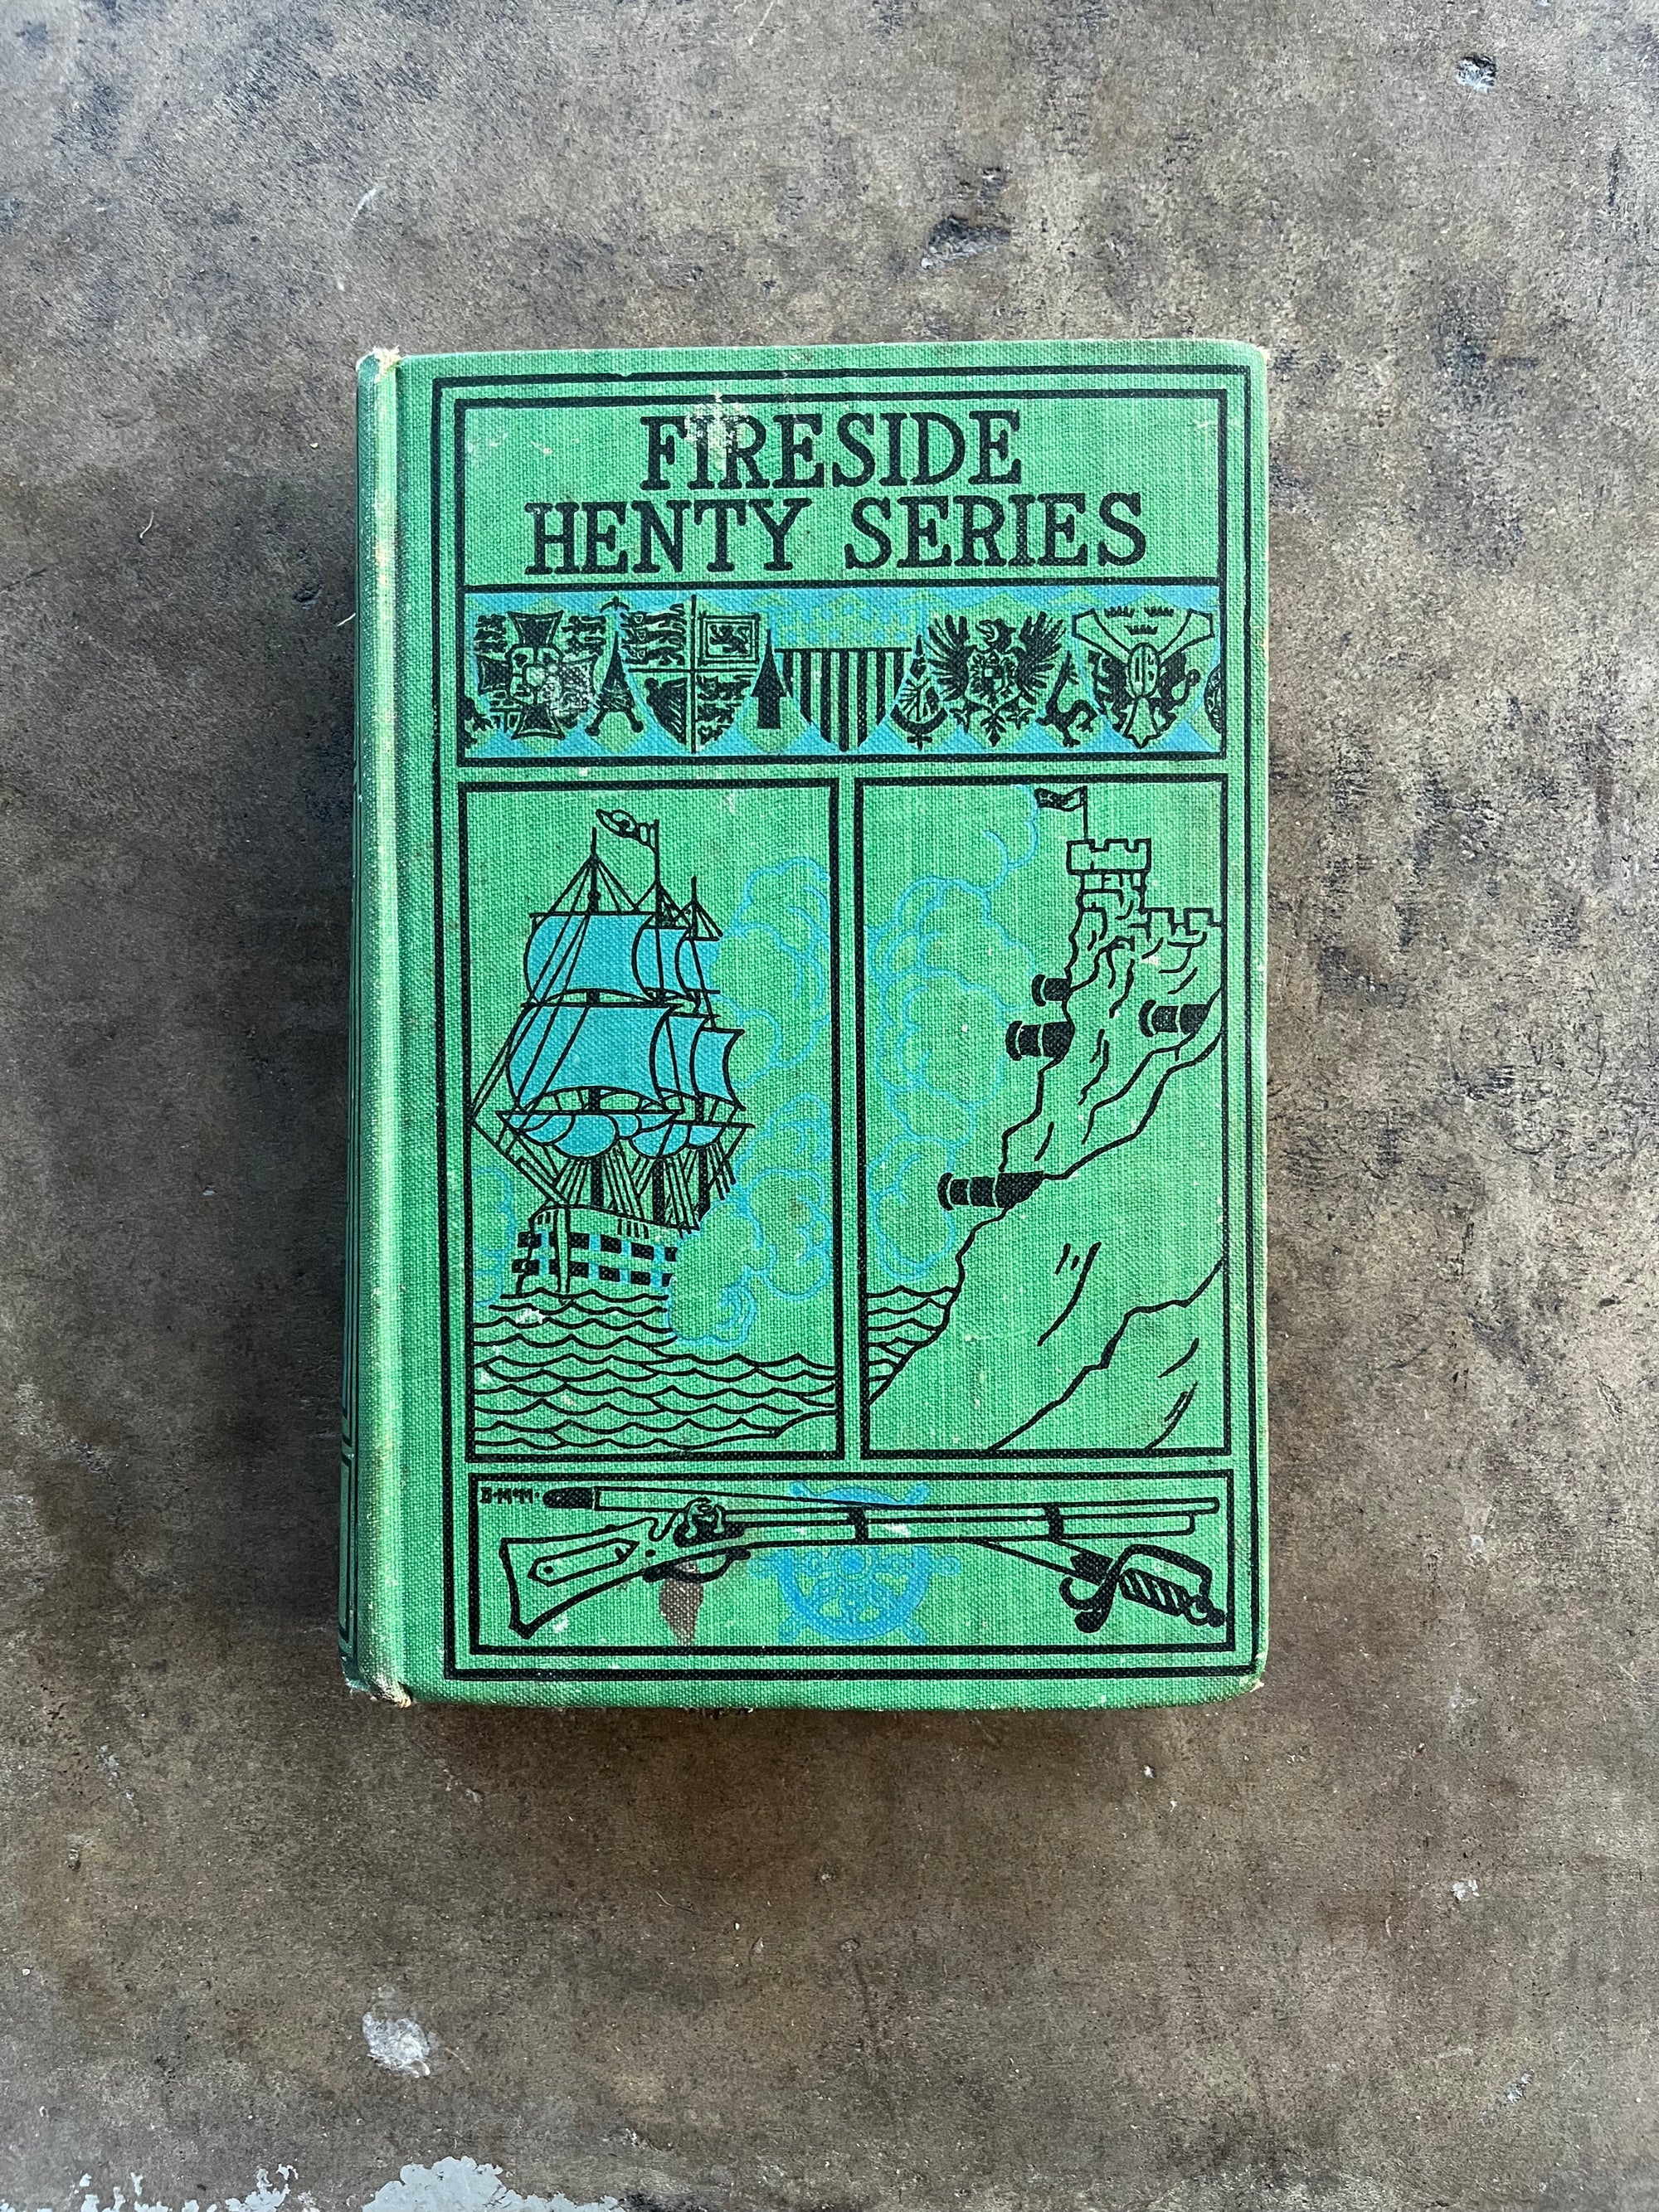 "Fireside Henty Series" Book